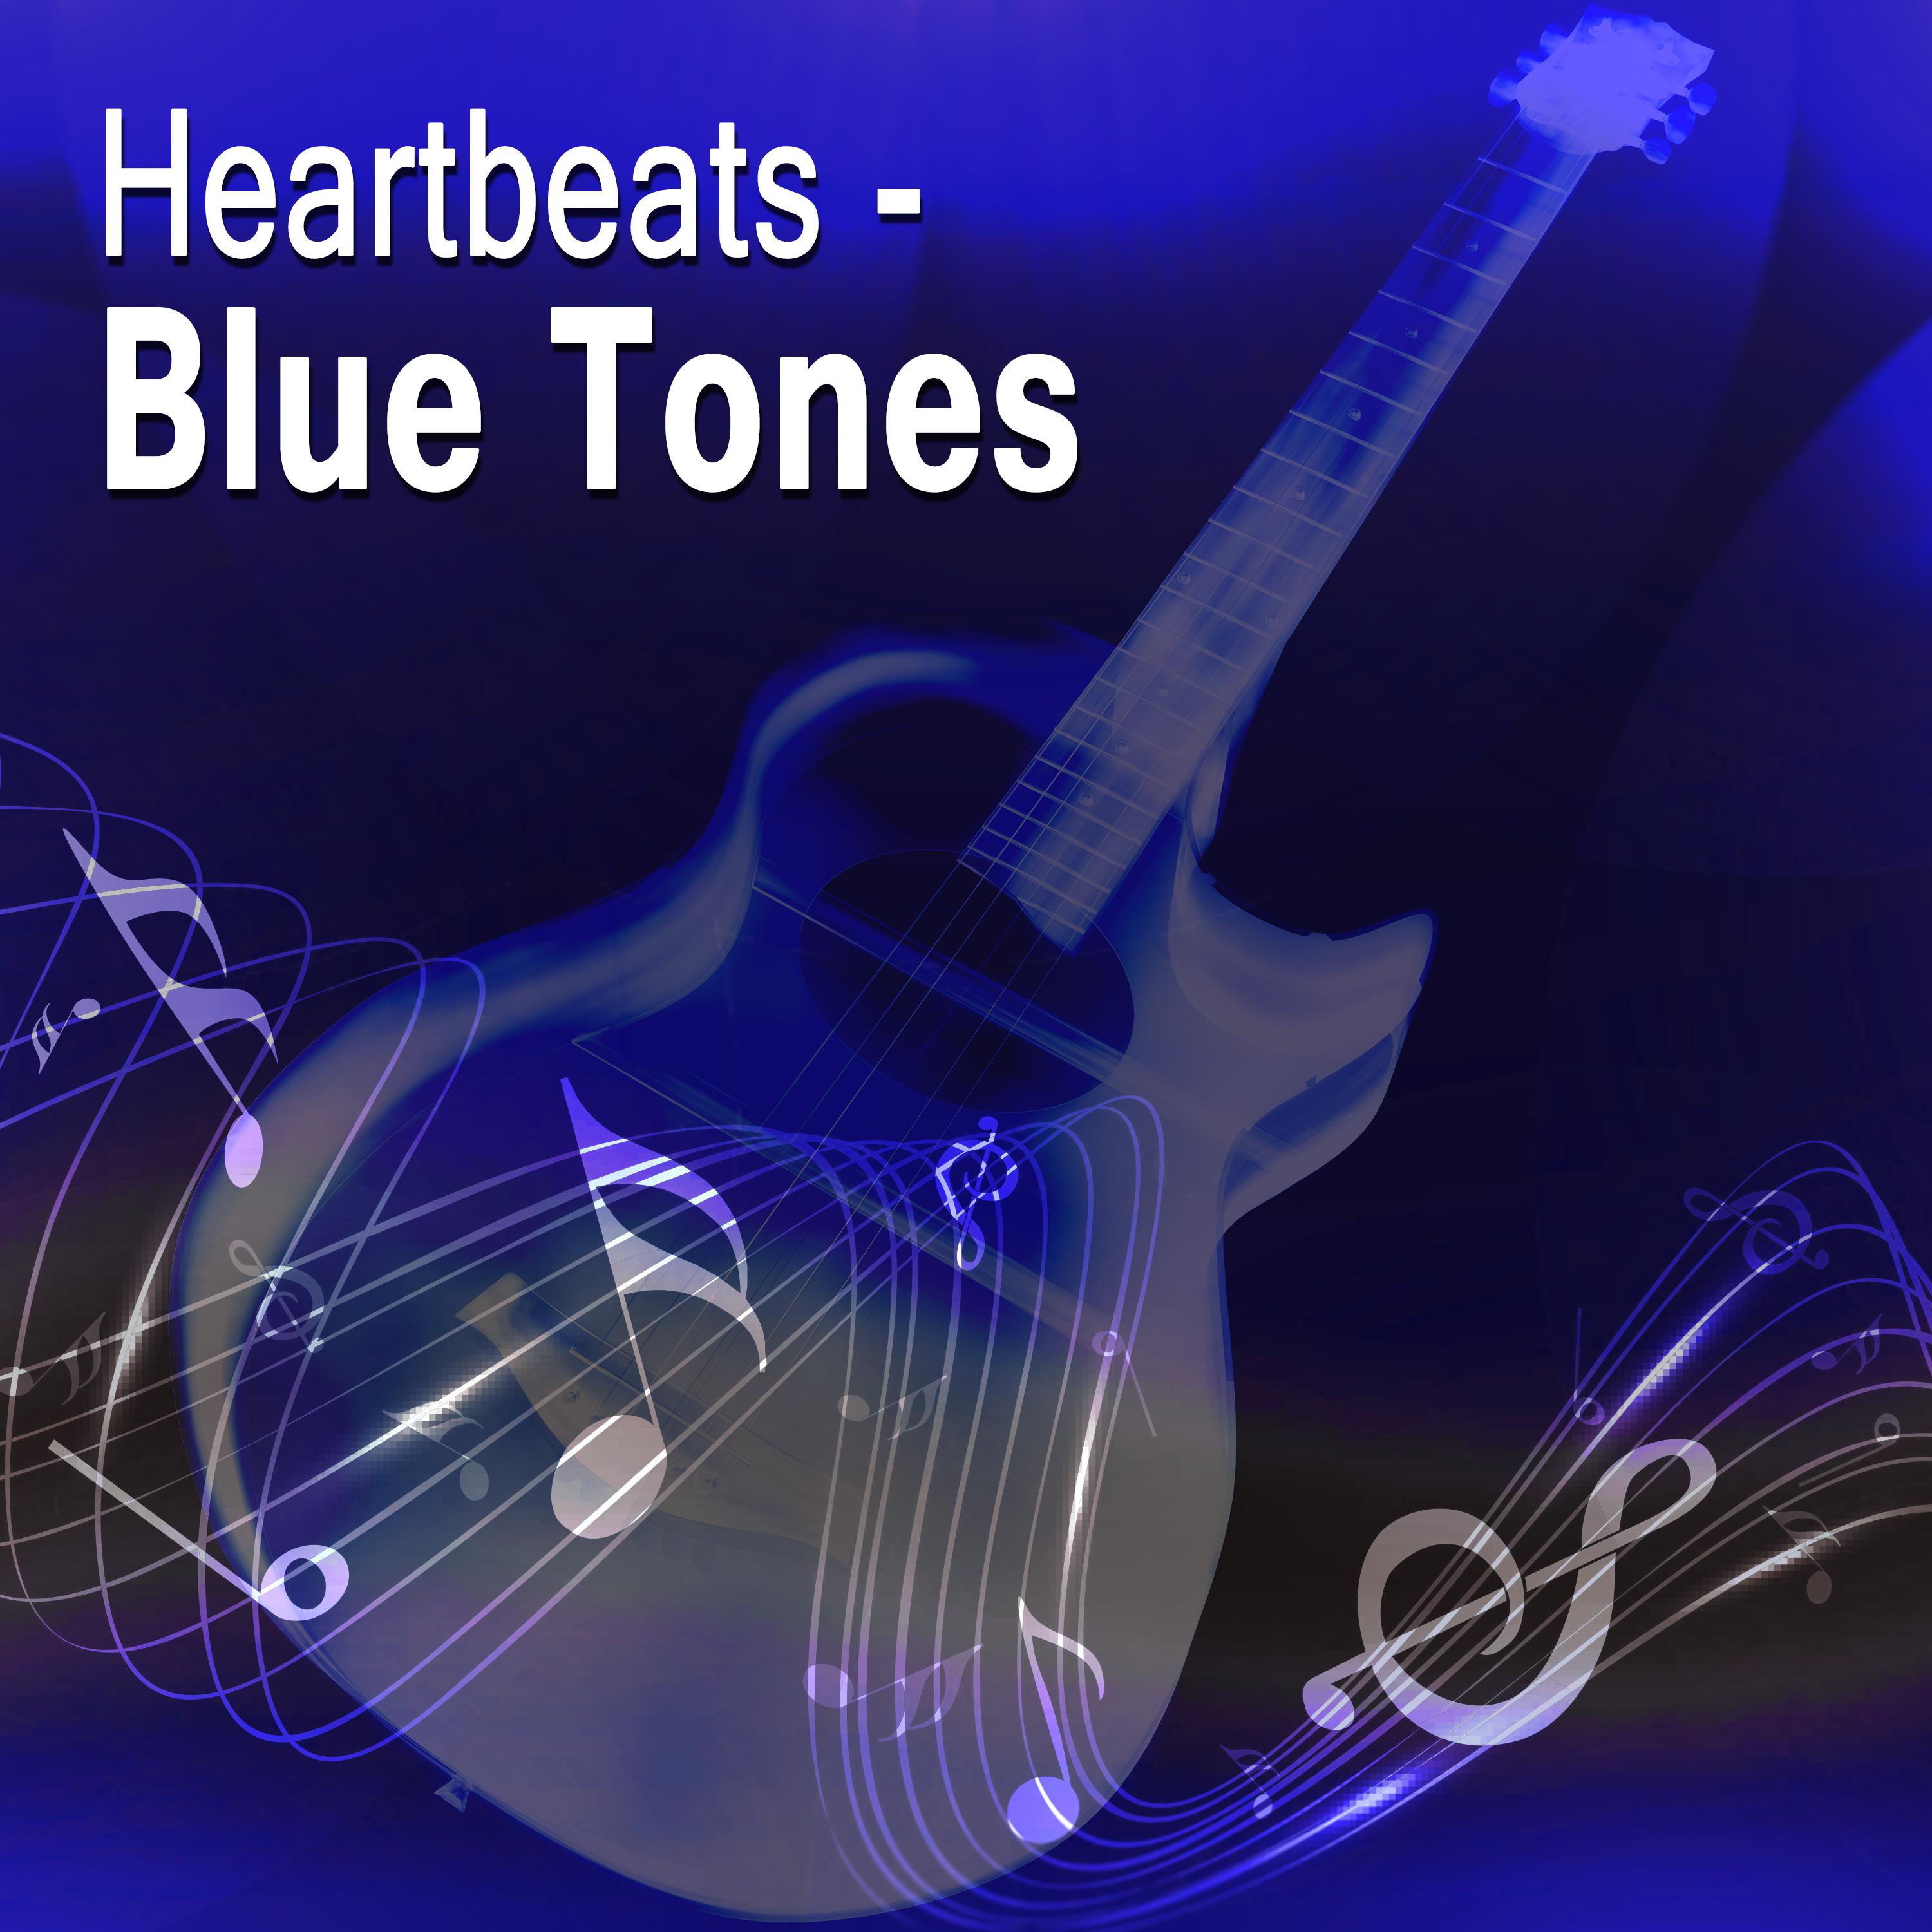 Heartbeats - Blue Tones